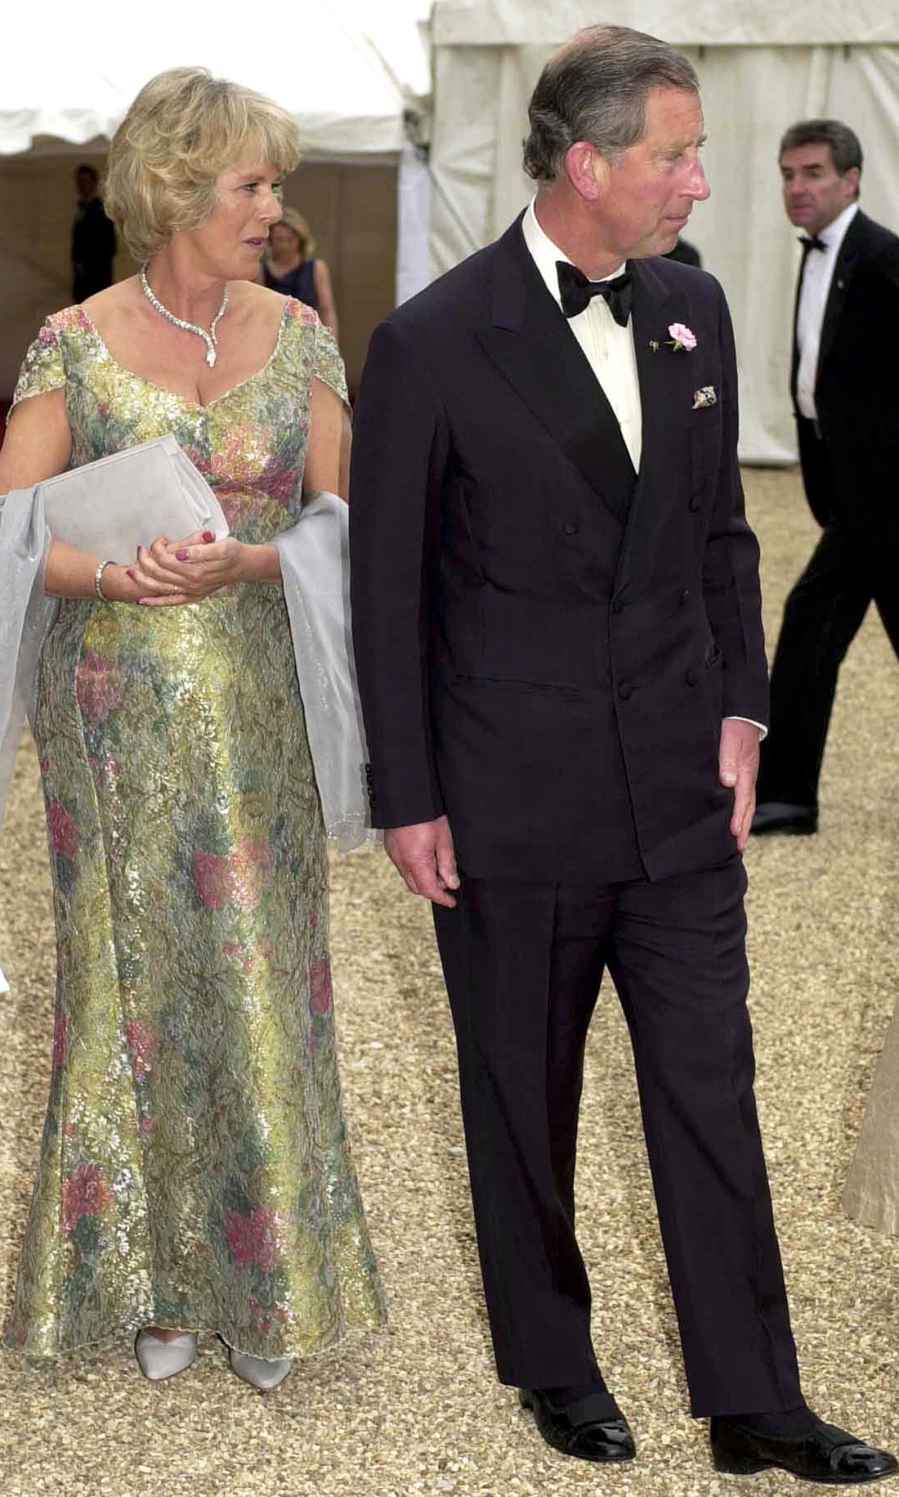 Camilla Duchess of Cornwall's Style - June 11, 2001